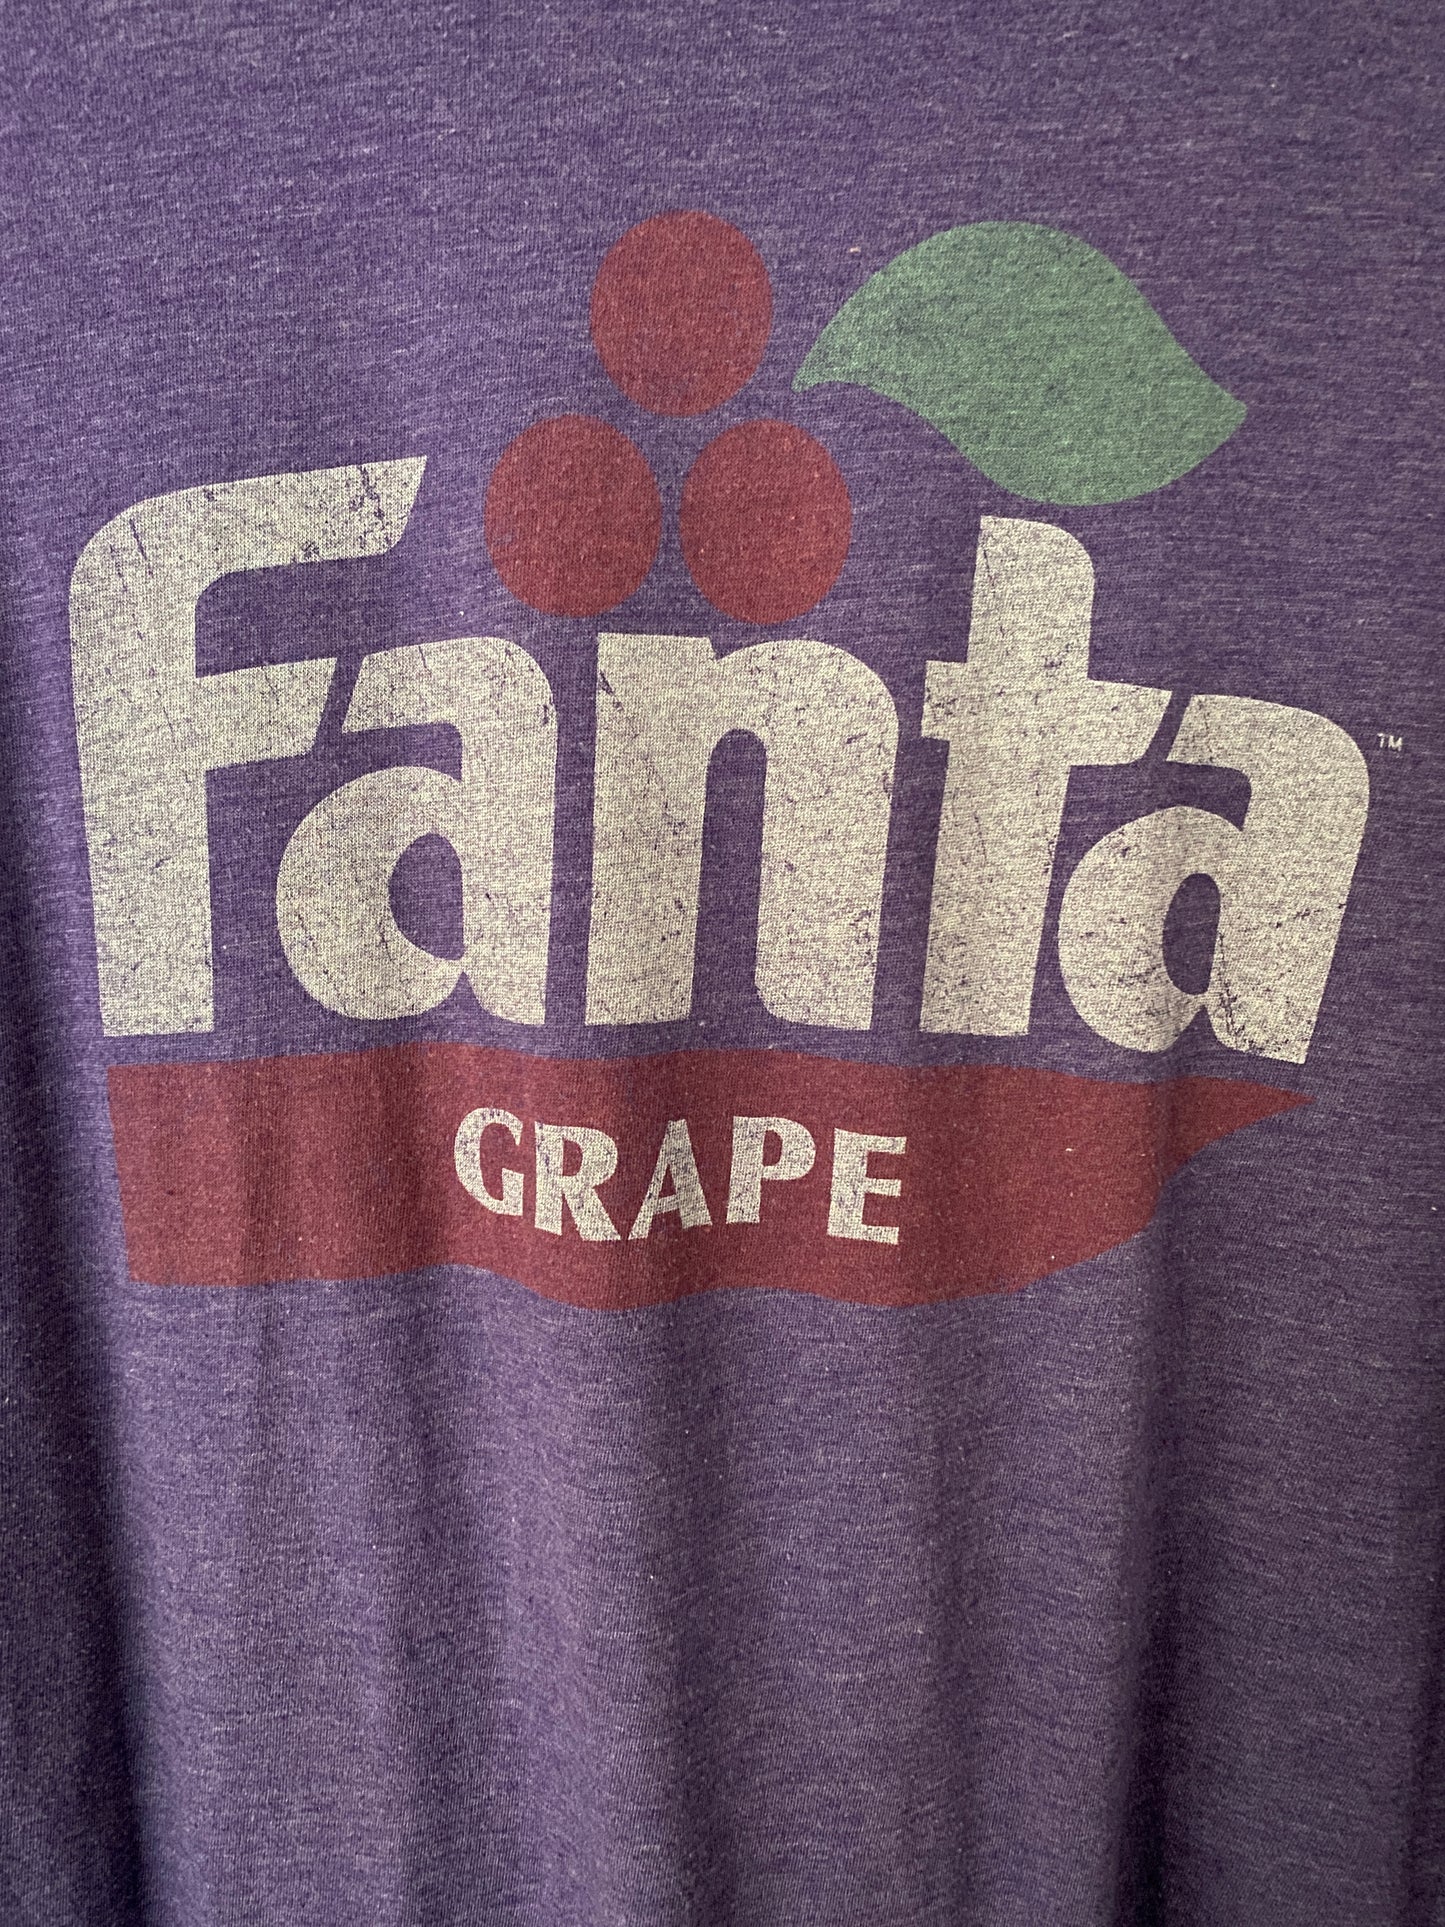 Fanta Grape T-Shirt - 2XL